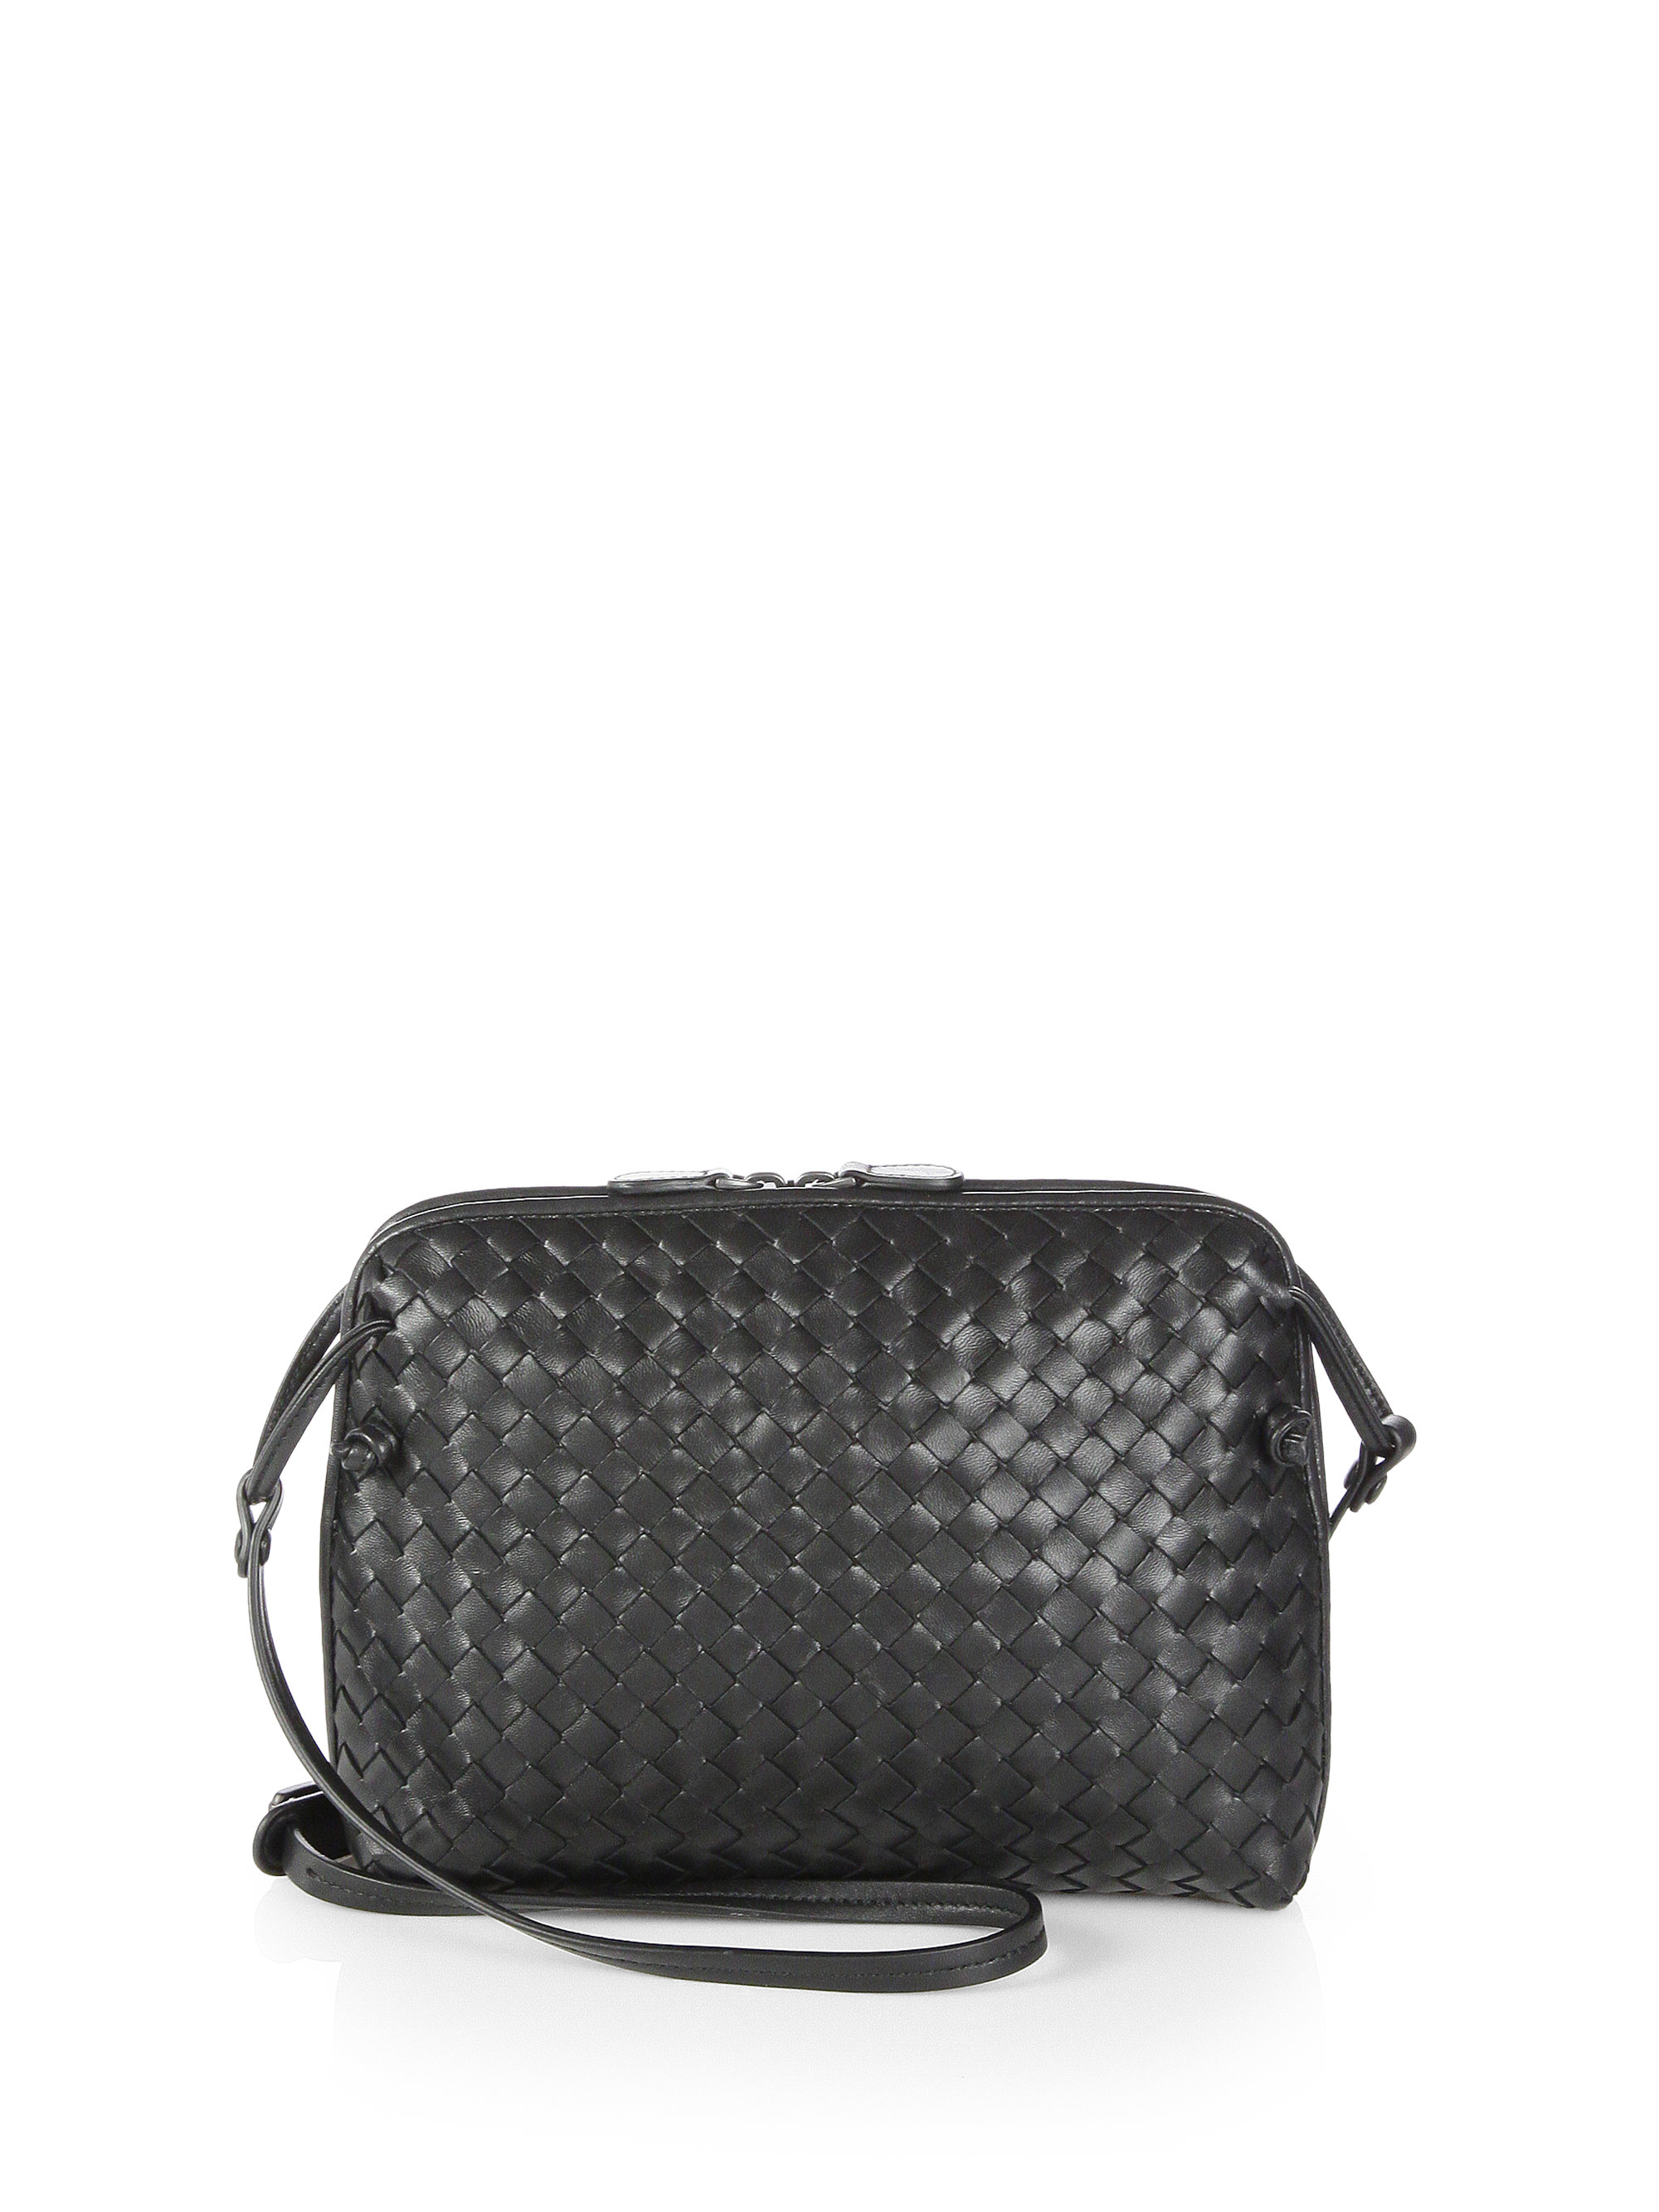 Lyst - Bottega Veneta Small Pillow Intrecciato Leather Crossbody Bag in ...